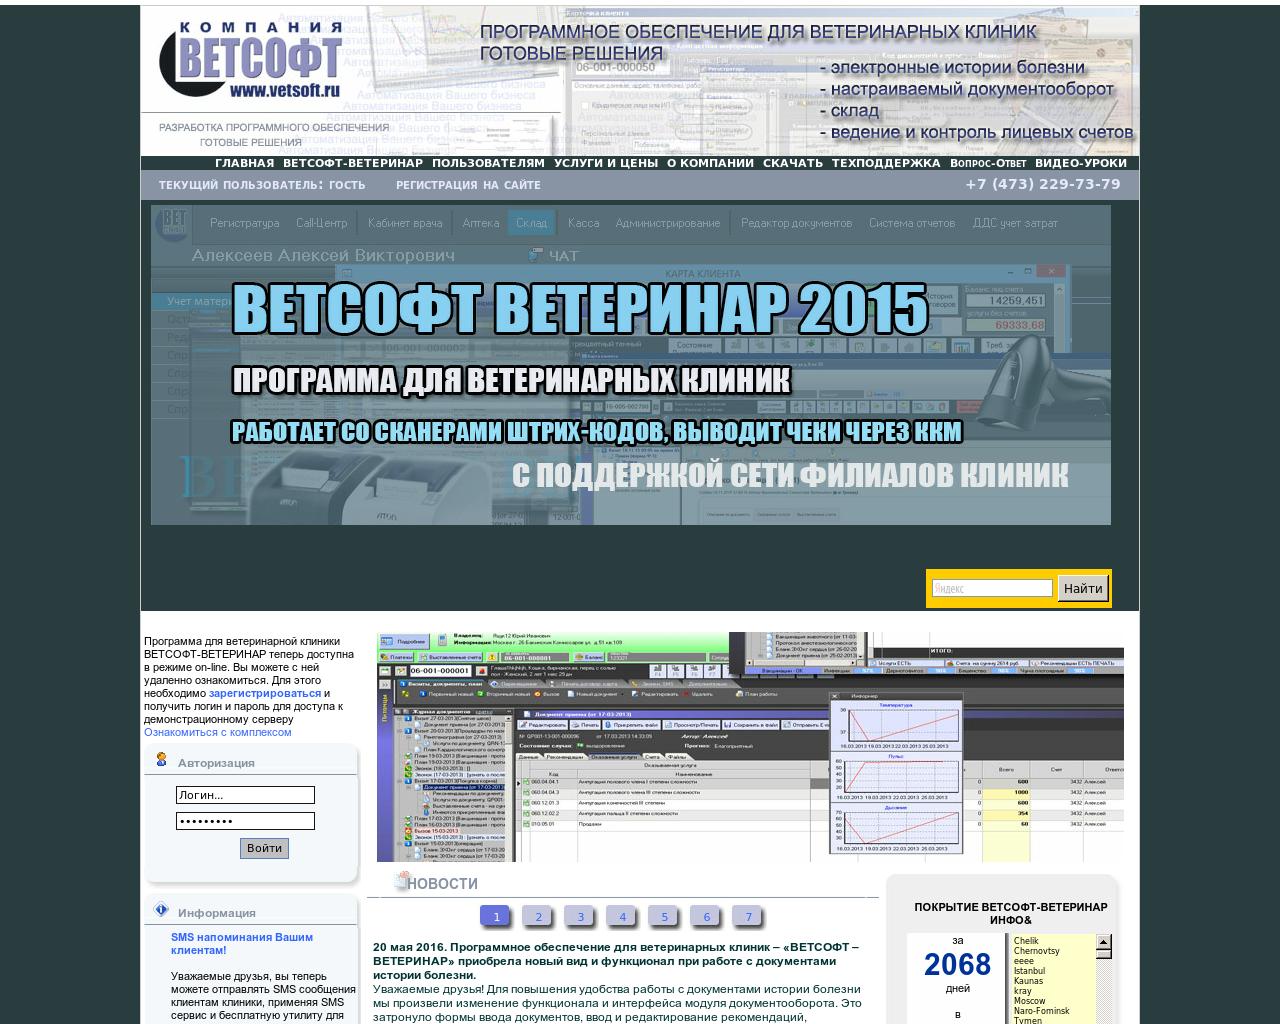 Изображение сайта vetsoft.ru в разрешении 1280x1024